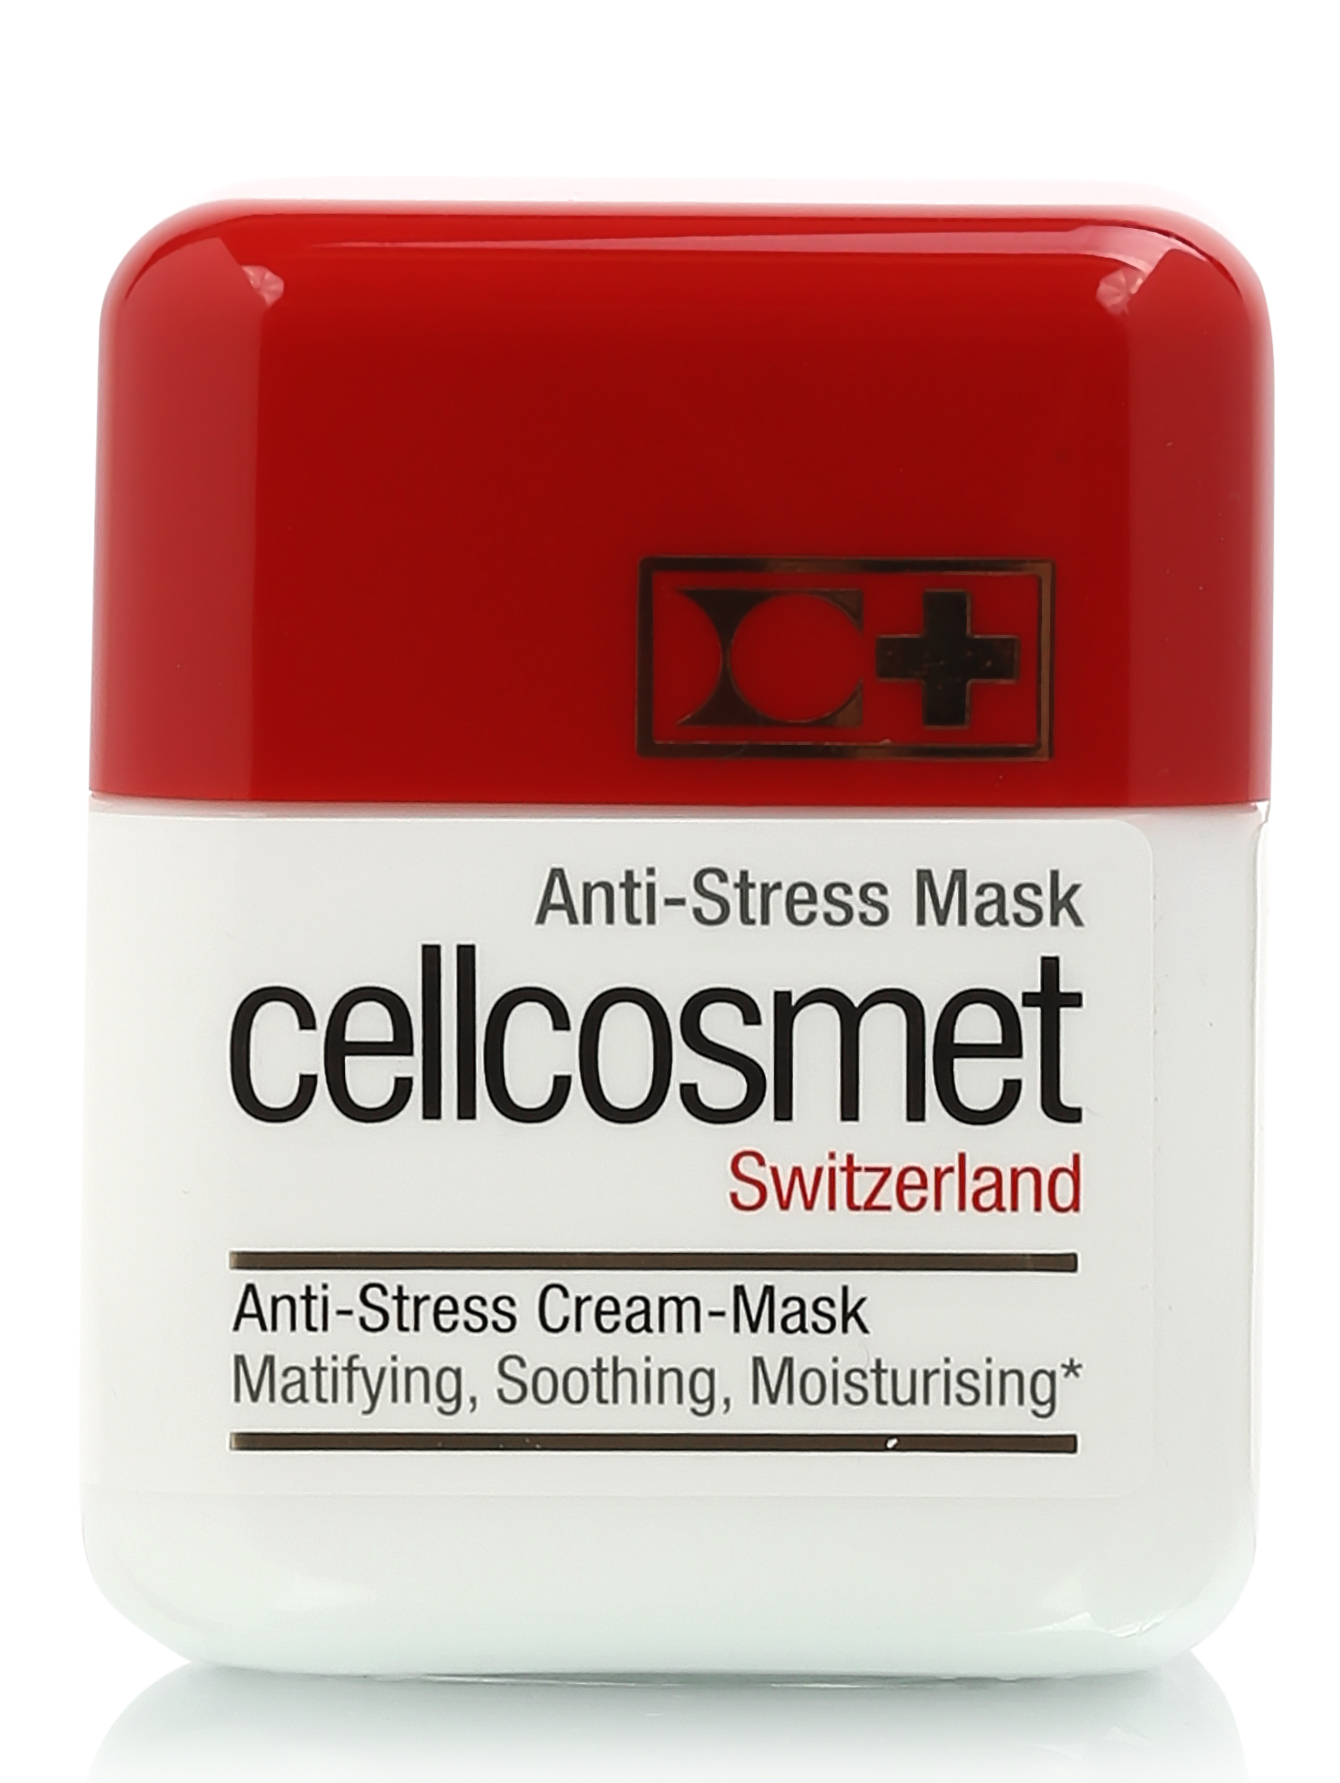  Крем-маска анти-стресс - Mask Cream, 50ml - Общий вид